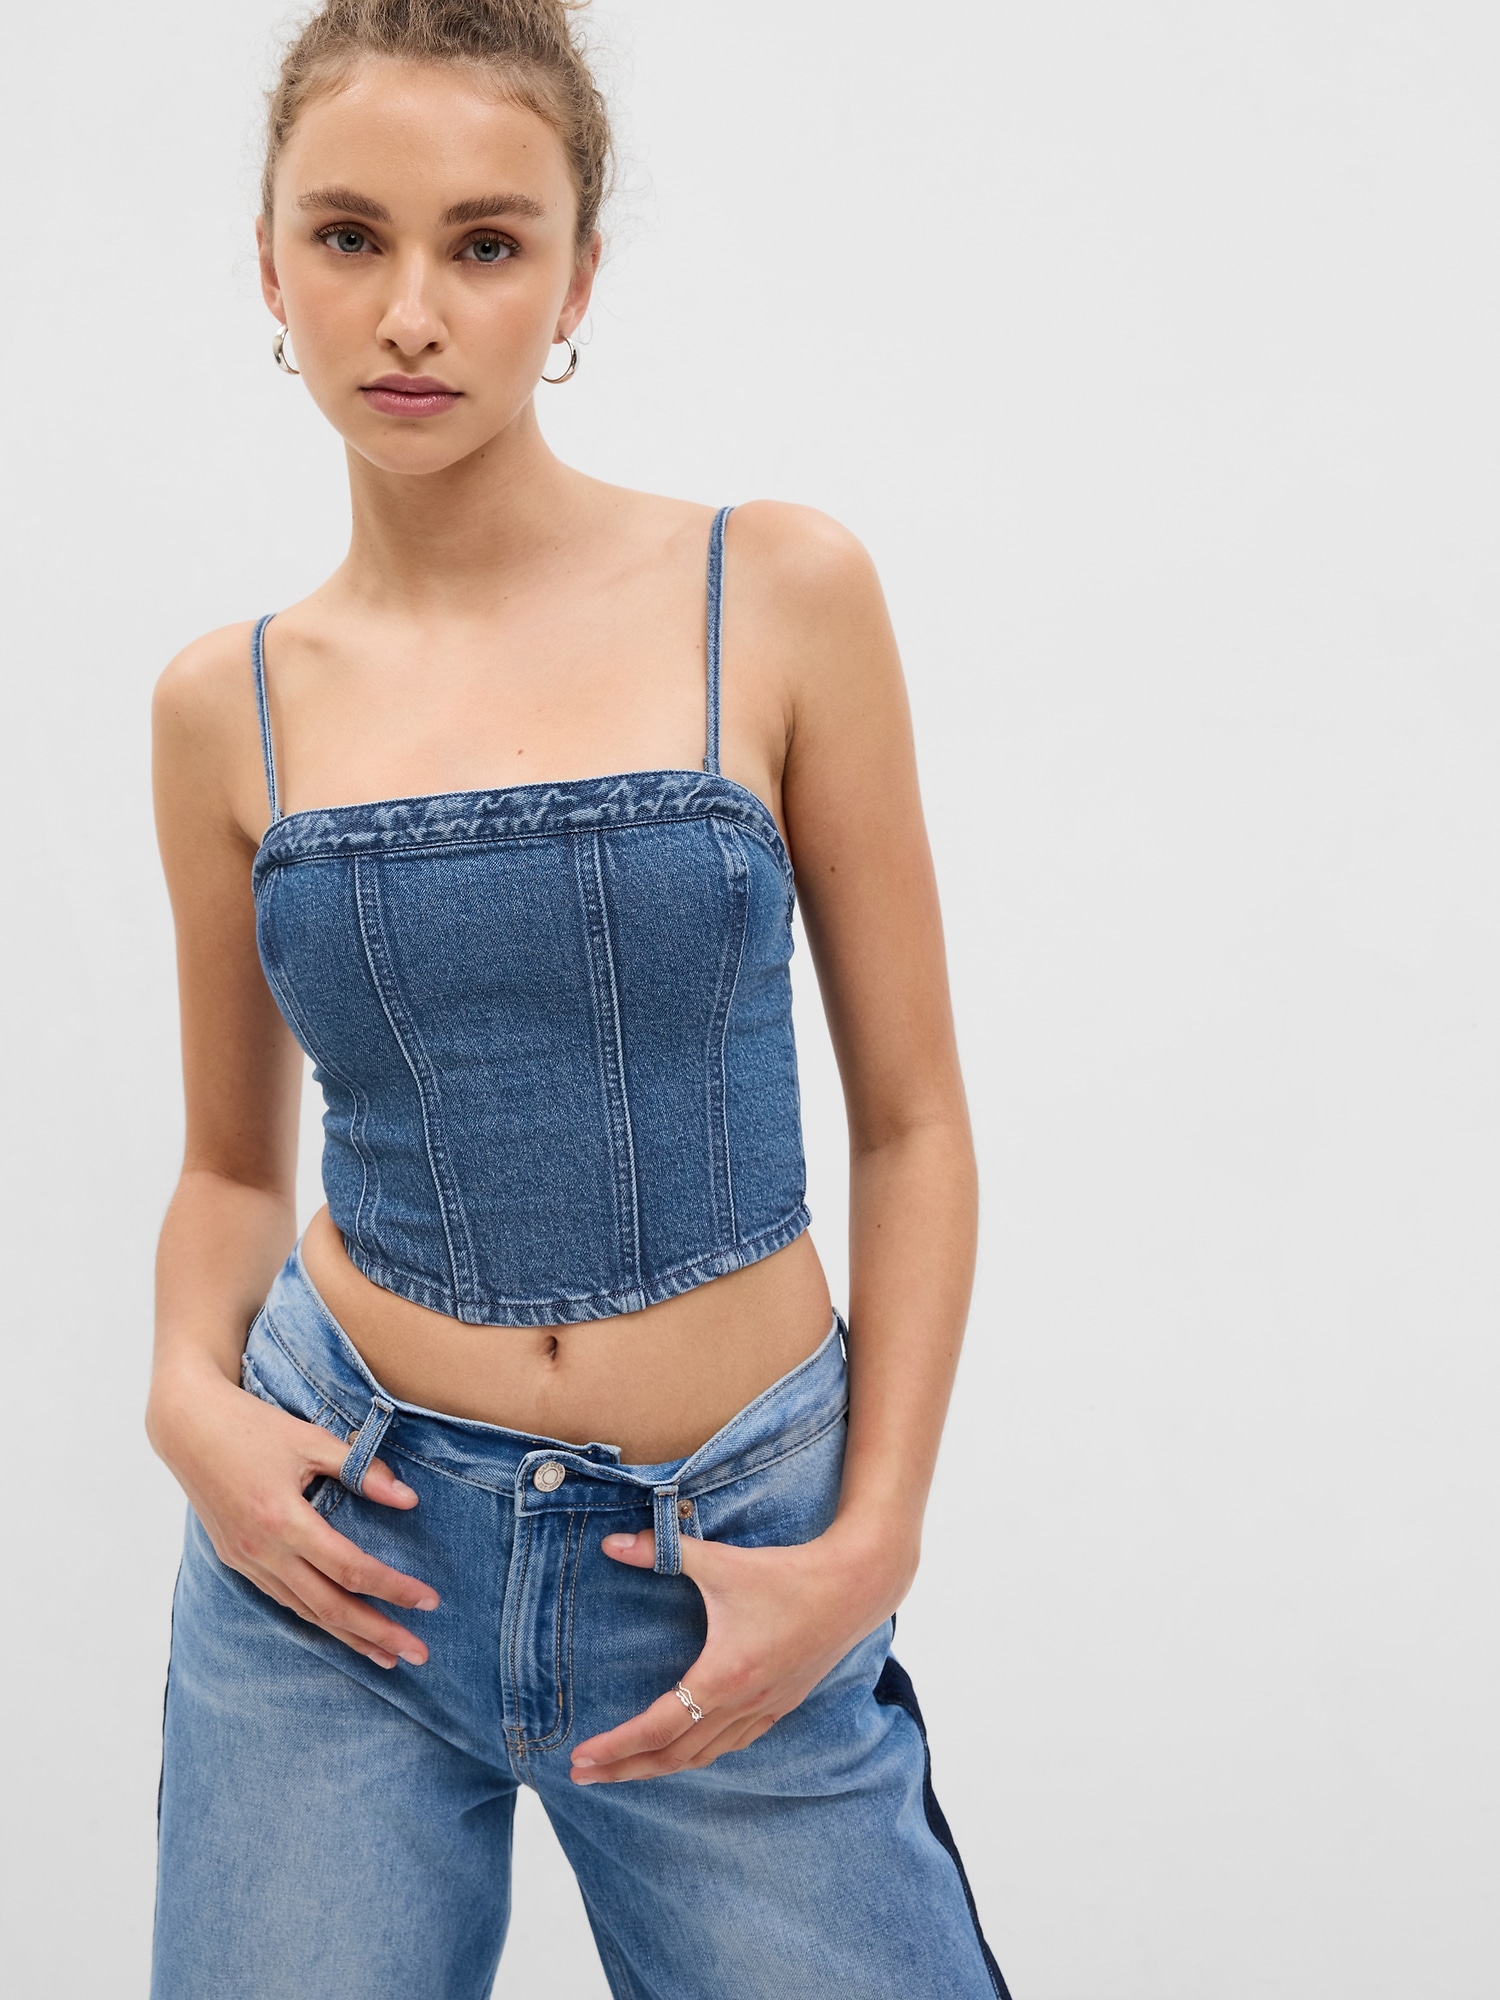 ELLACCI Women's Tassel Rhinestone Denim Bustier Crop Top Jean